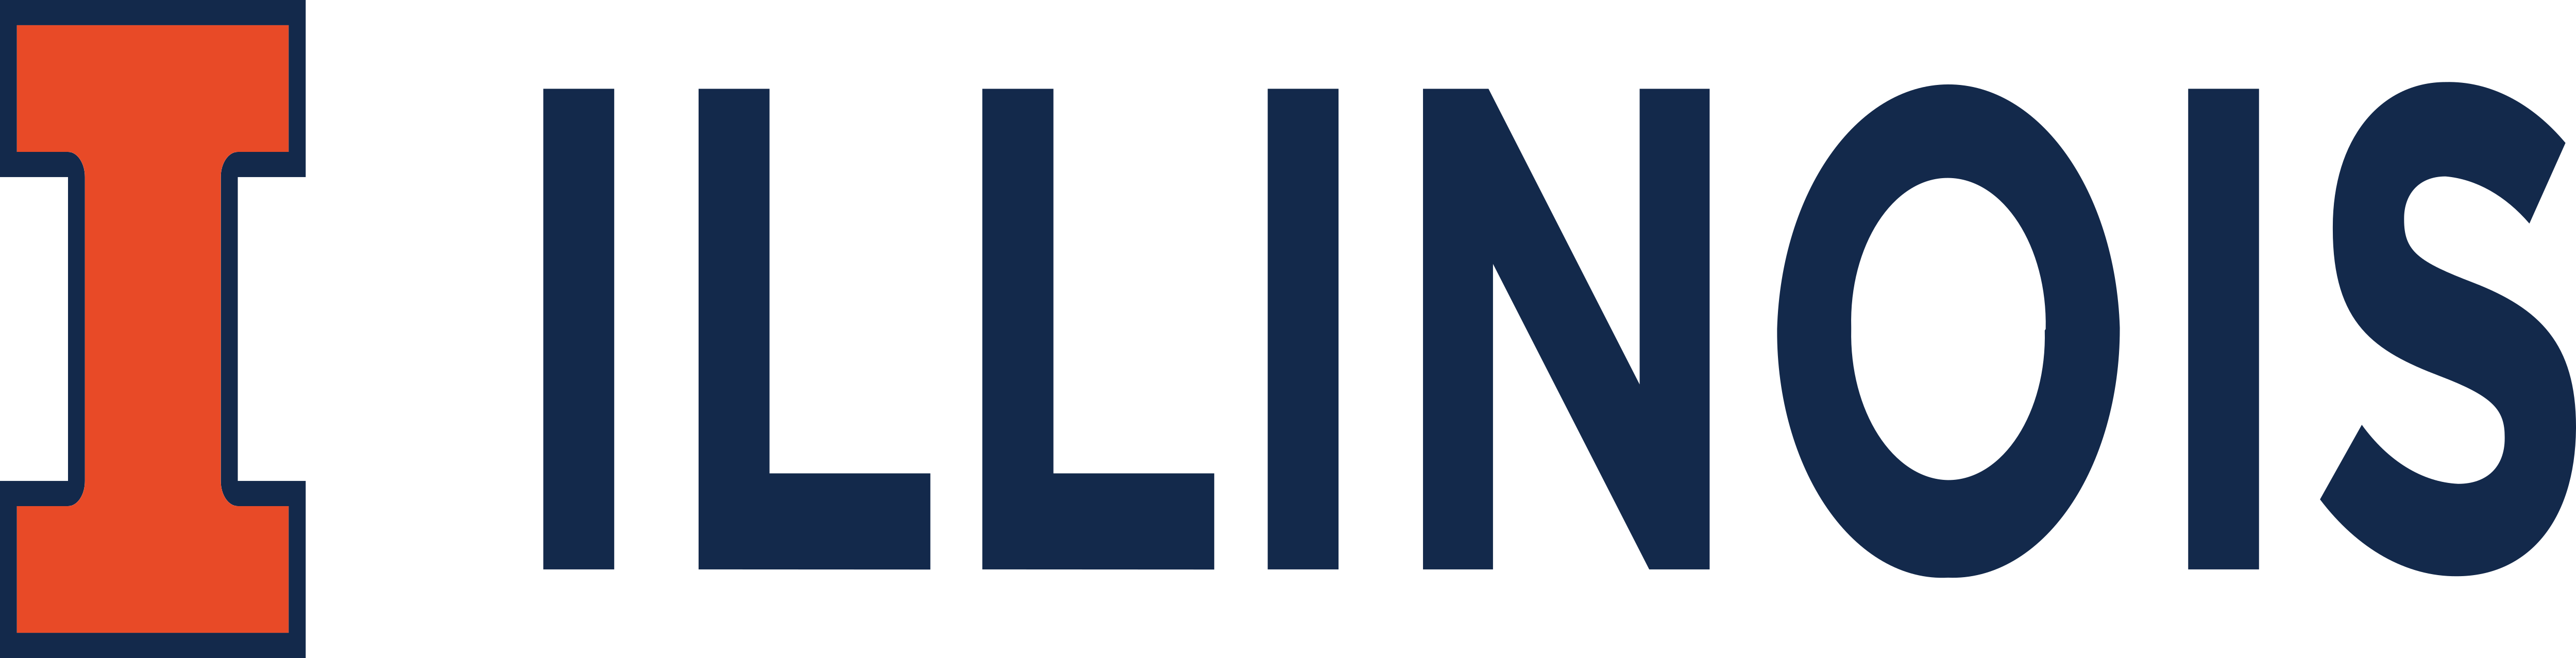 University_of_Illinois_Logo_full